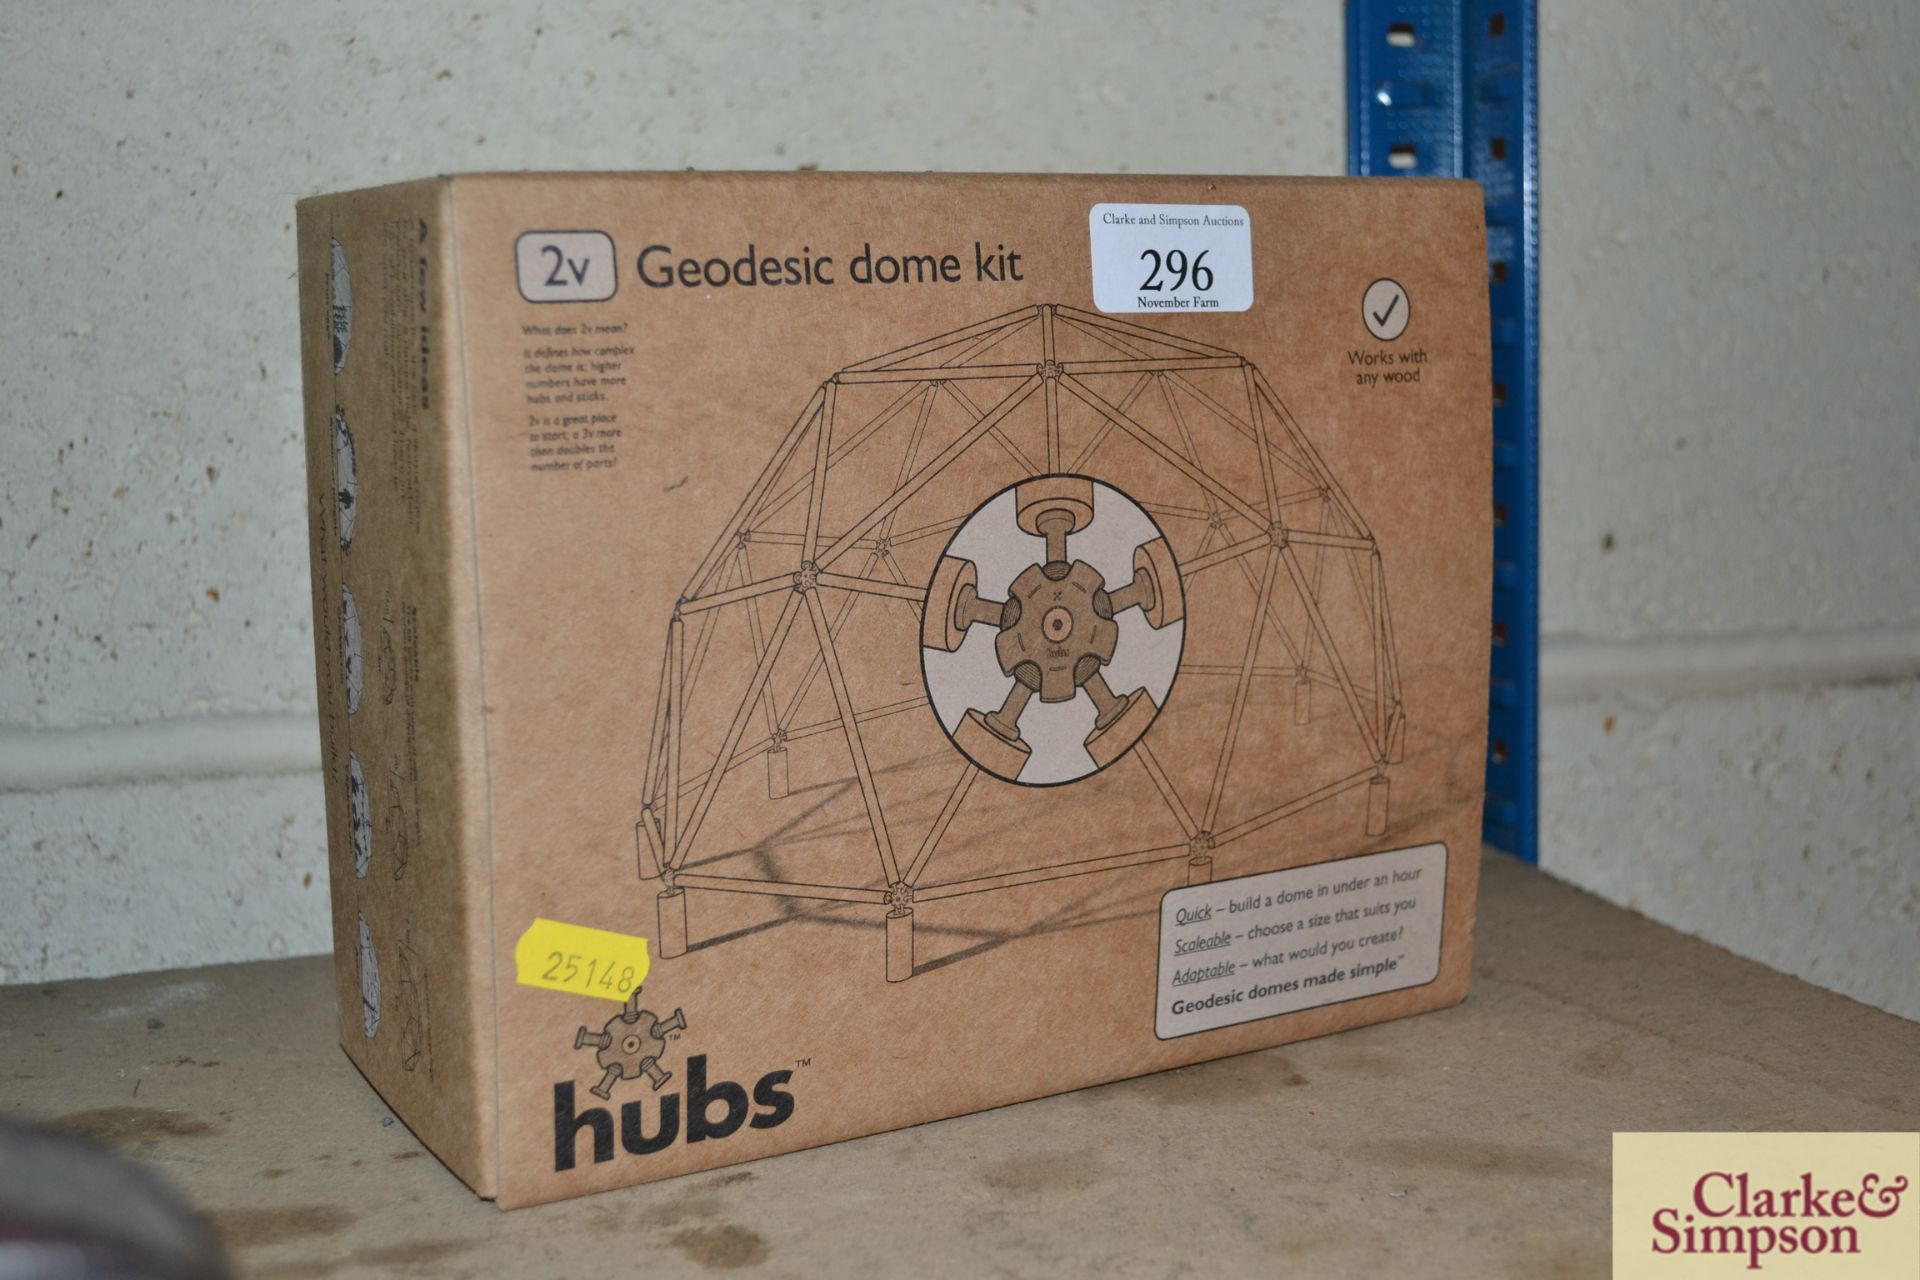 Unused Hubs geodesic dome kit. V